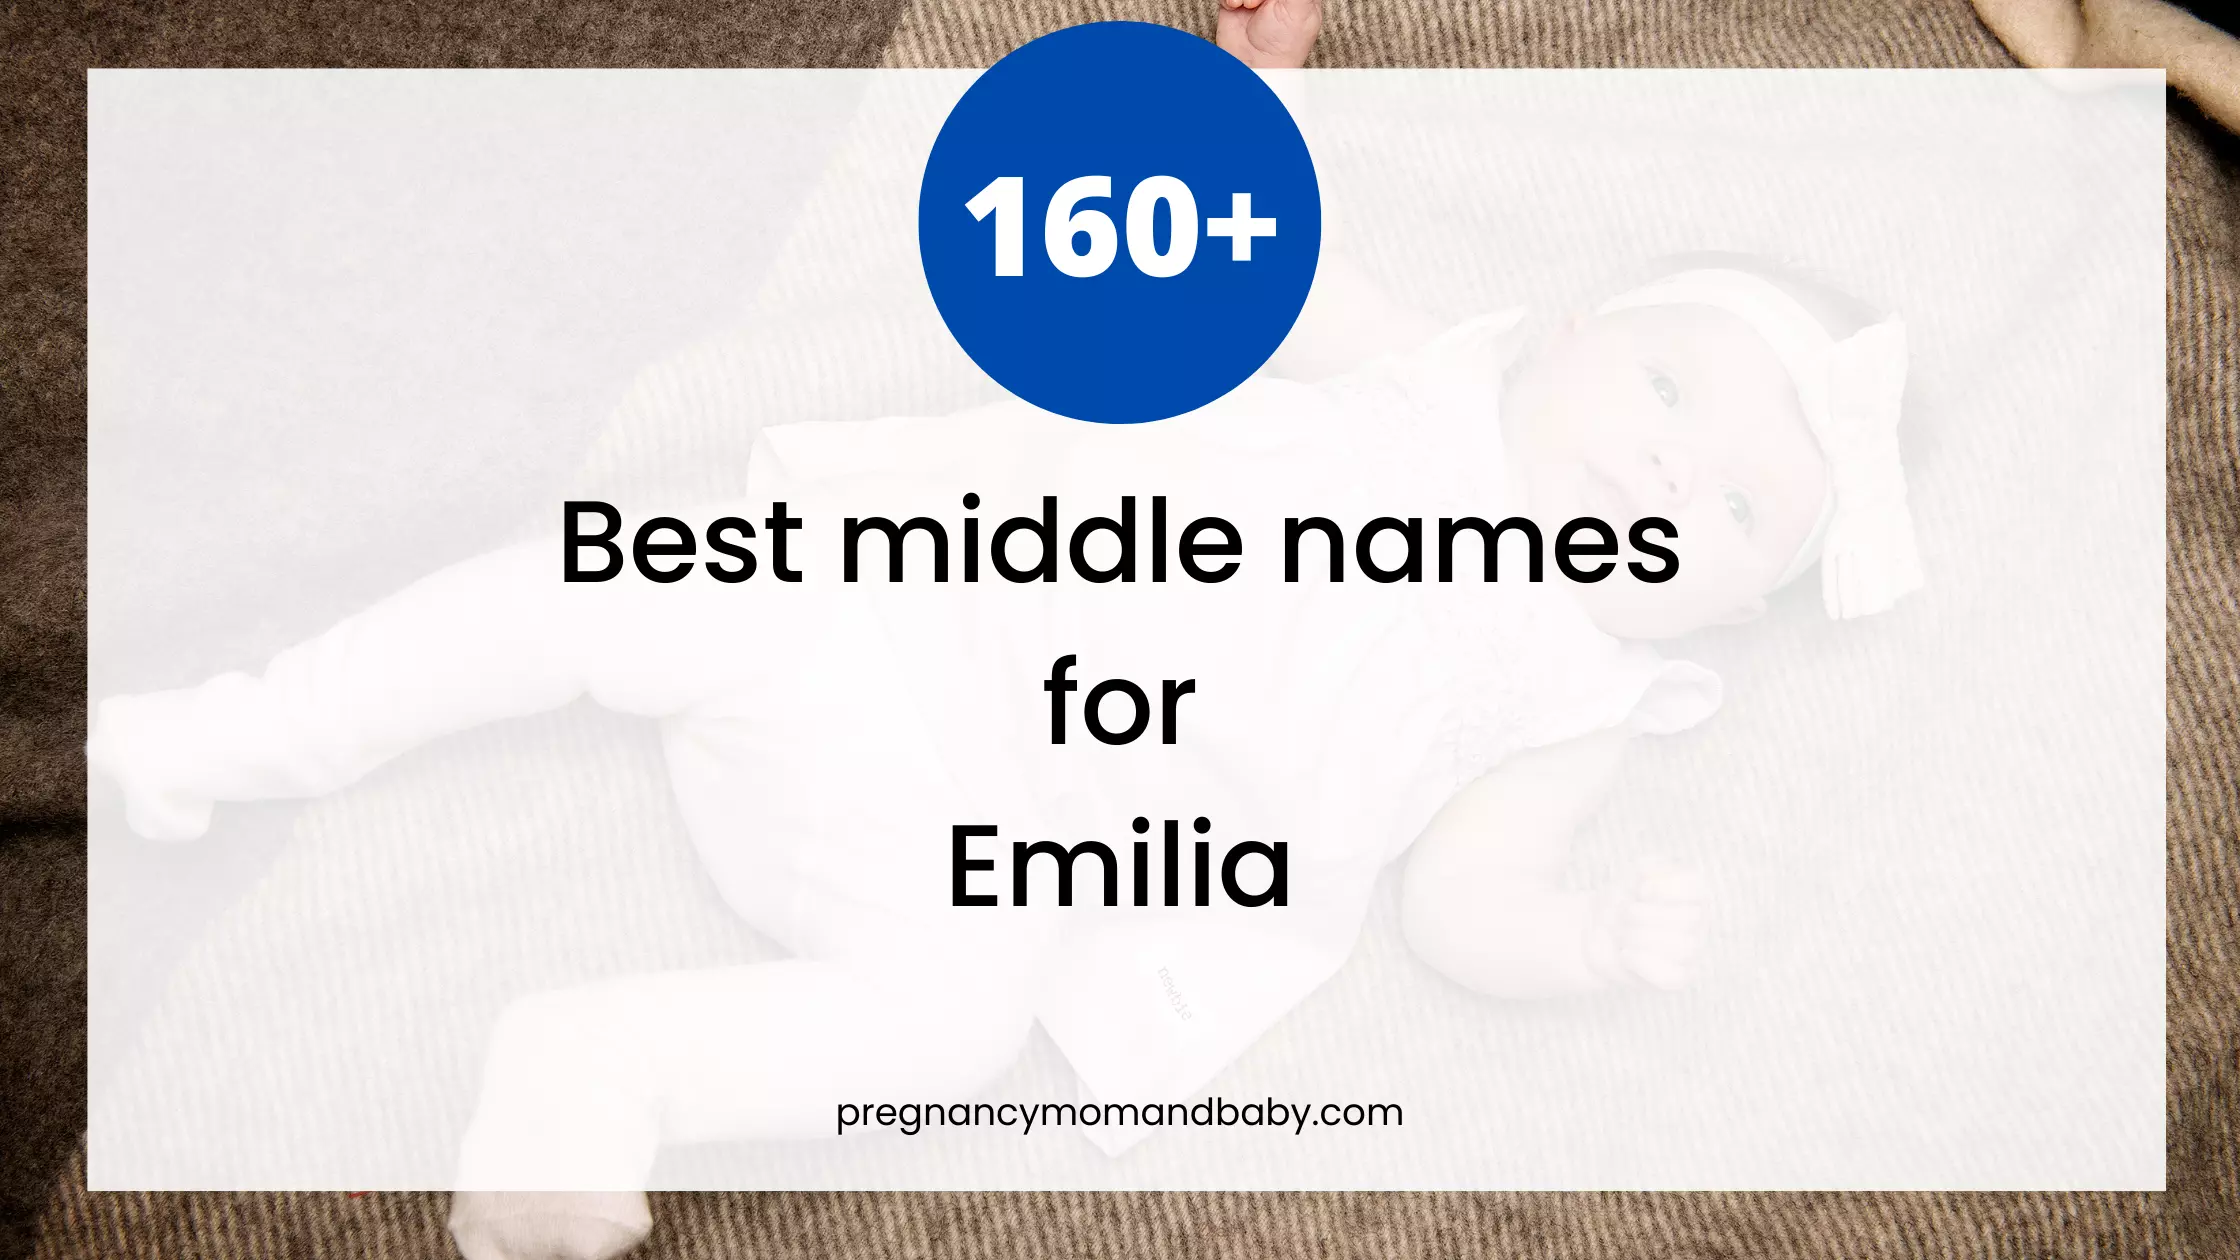 middle names for emilia